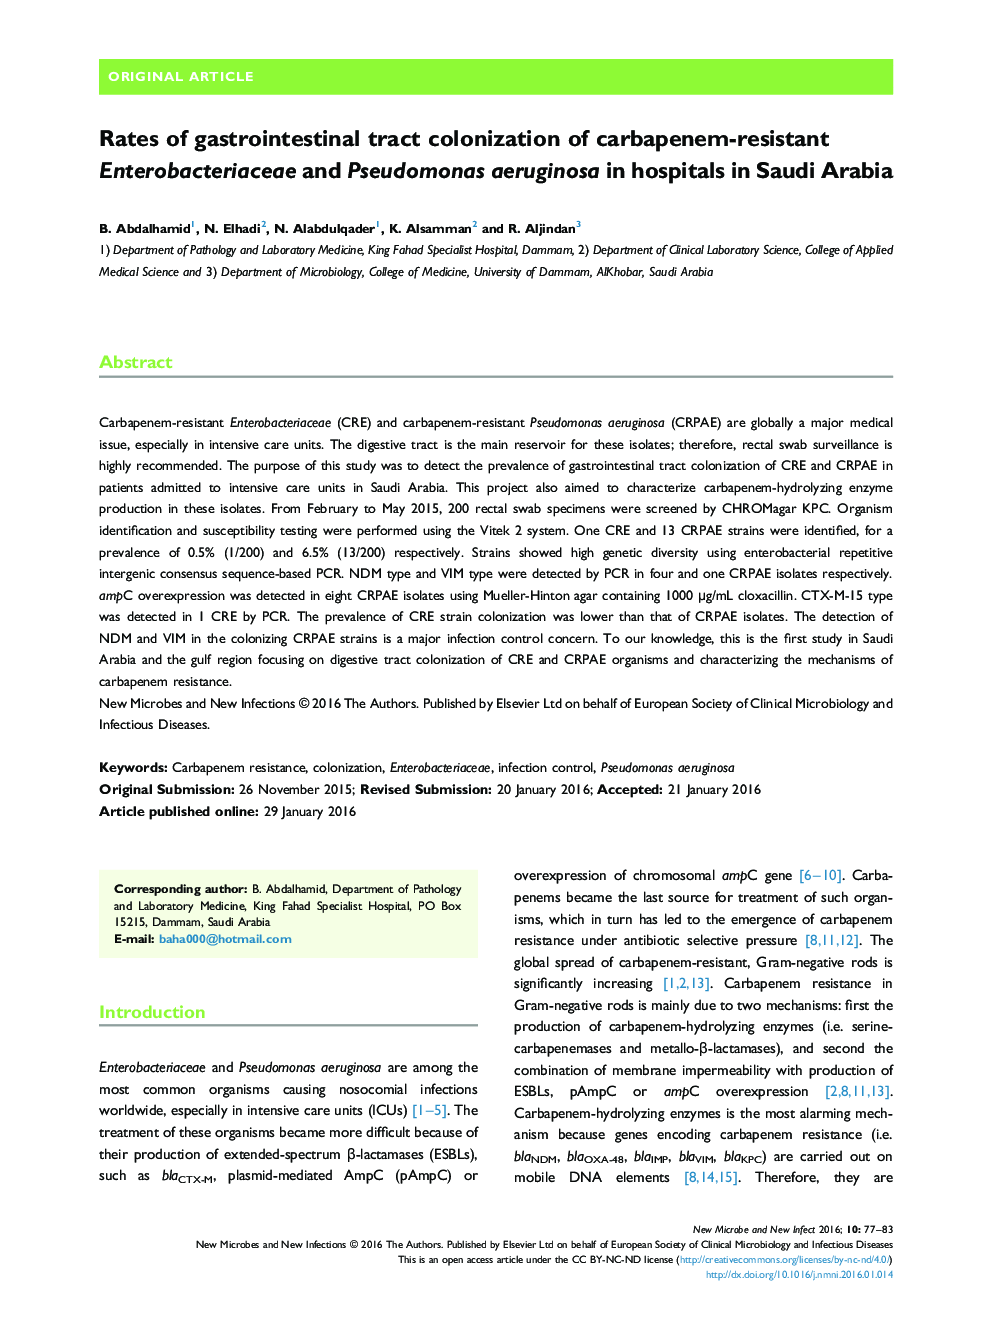 Rates of gastrointestinal tract colonization of carbapenem-resistant Enterobacteriaceae and Pseudomonas aeruginosa in hospitals in Saudi Arabia